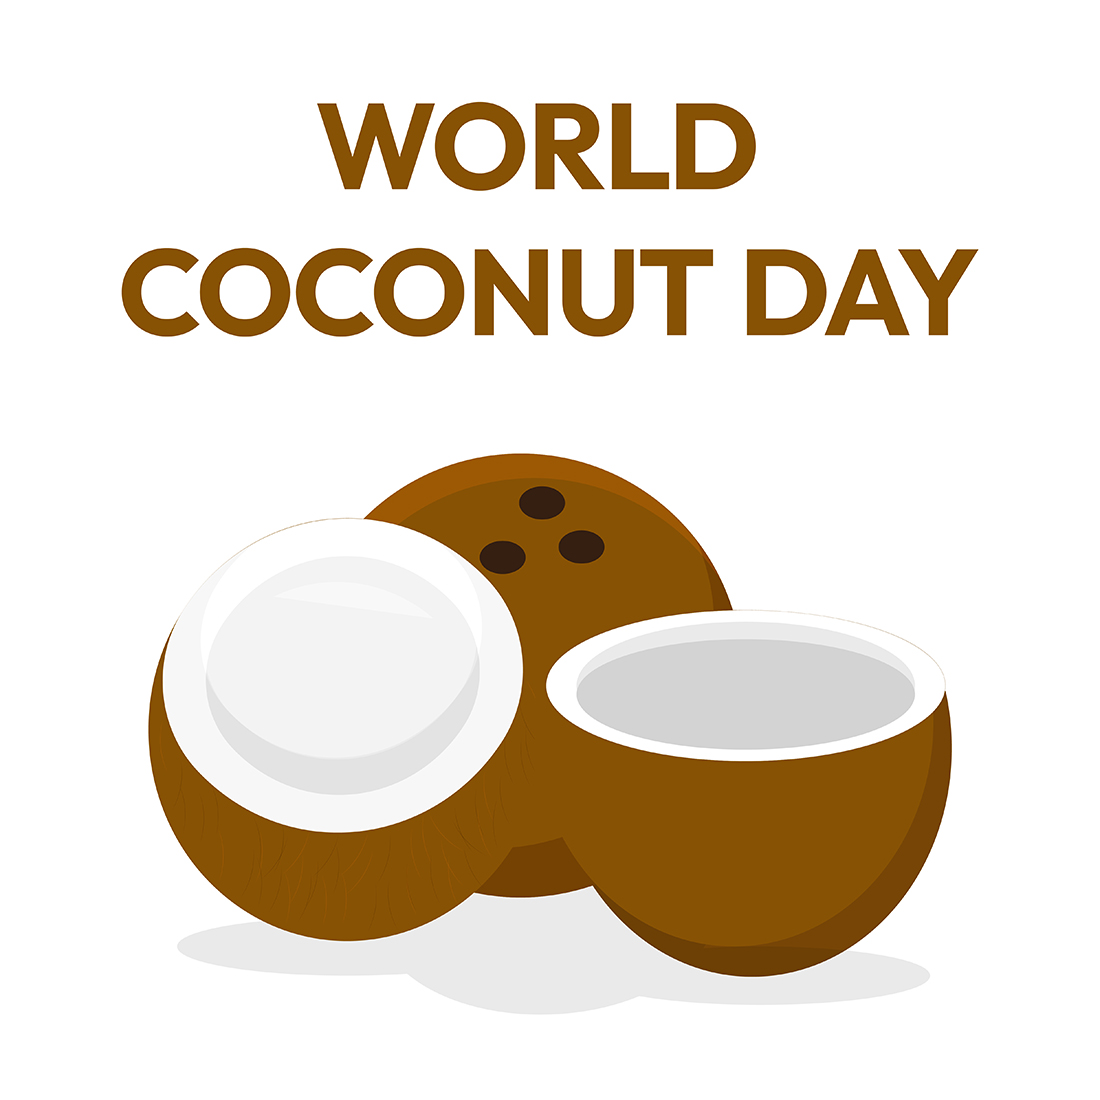 World coconut day design cover image.